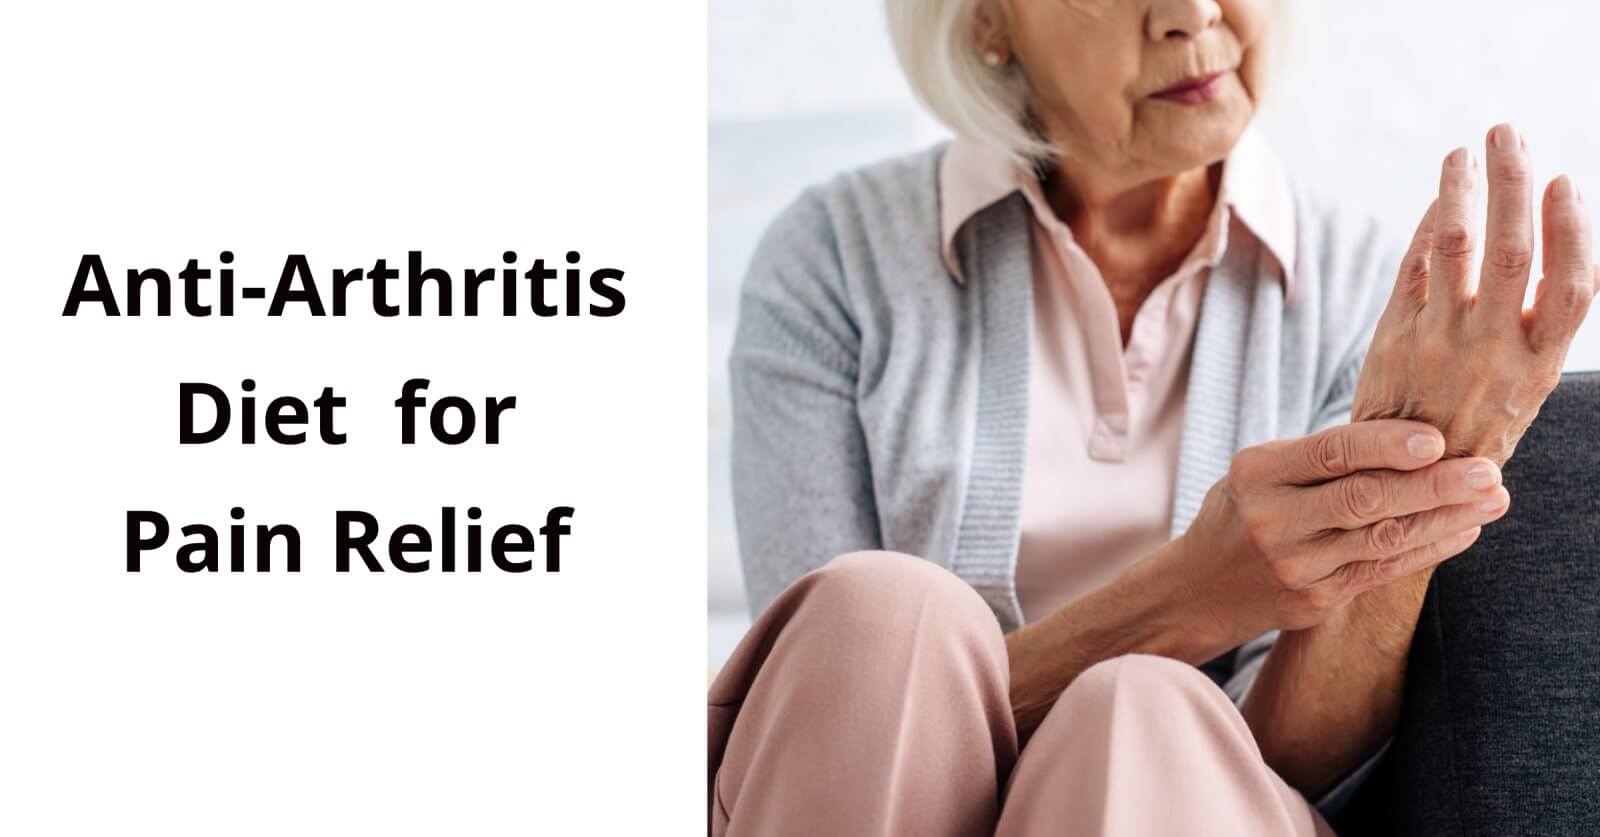 revitalizing recipes for pain relief through an anti arthritis diet.